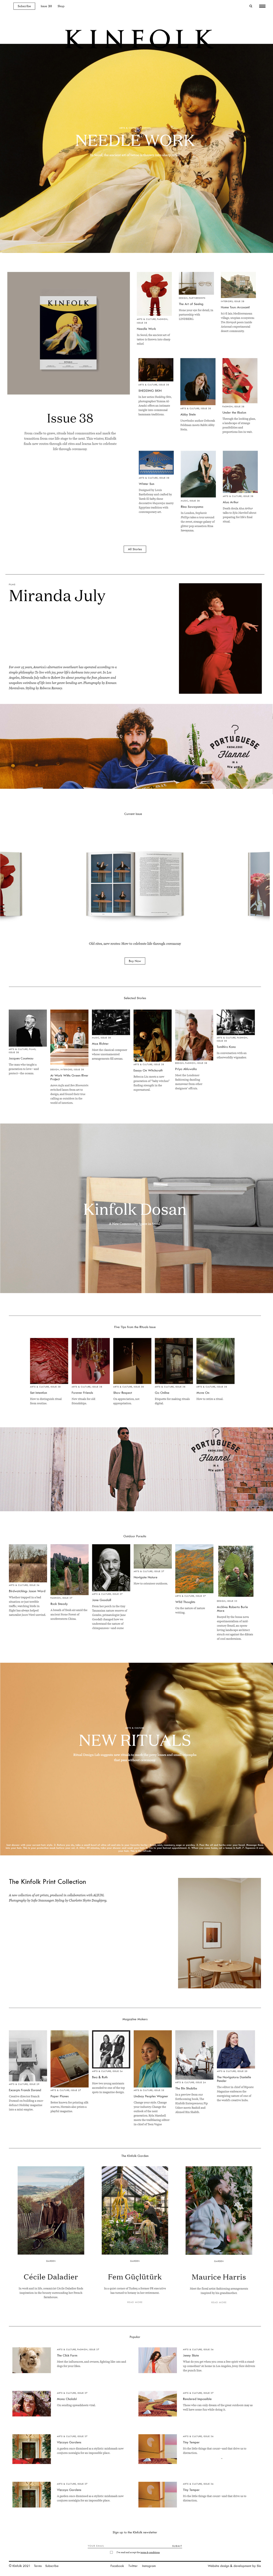 kinfolk杂志网站设计